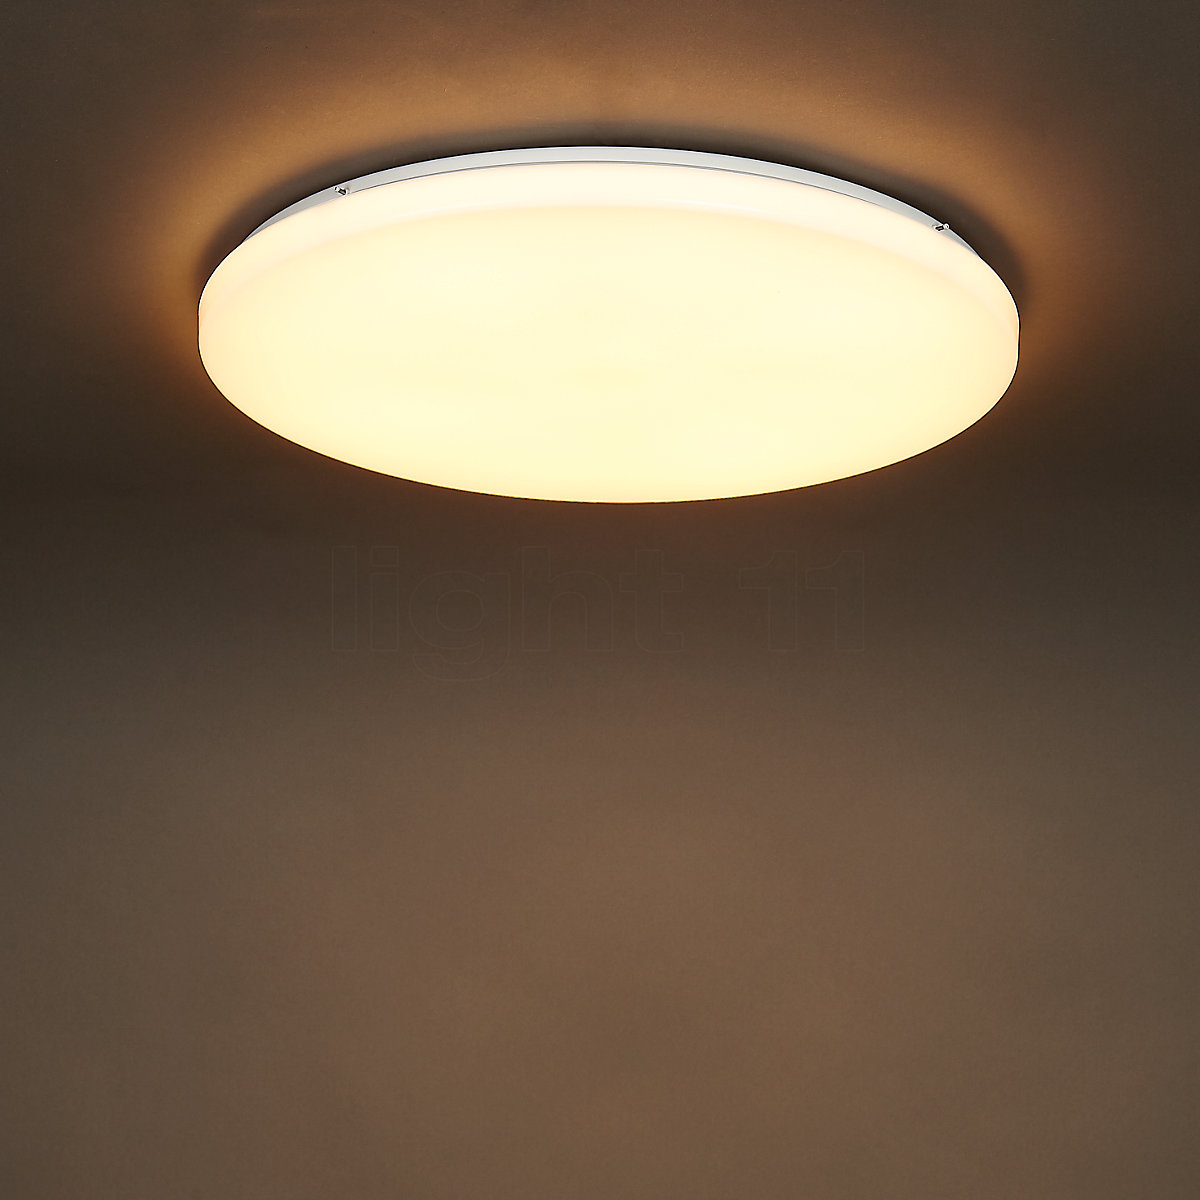 Clara LED Plafonnier/Applique  Plafonnier, Lampe de plafond